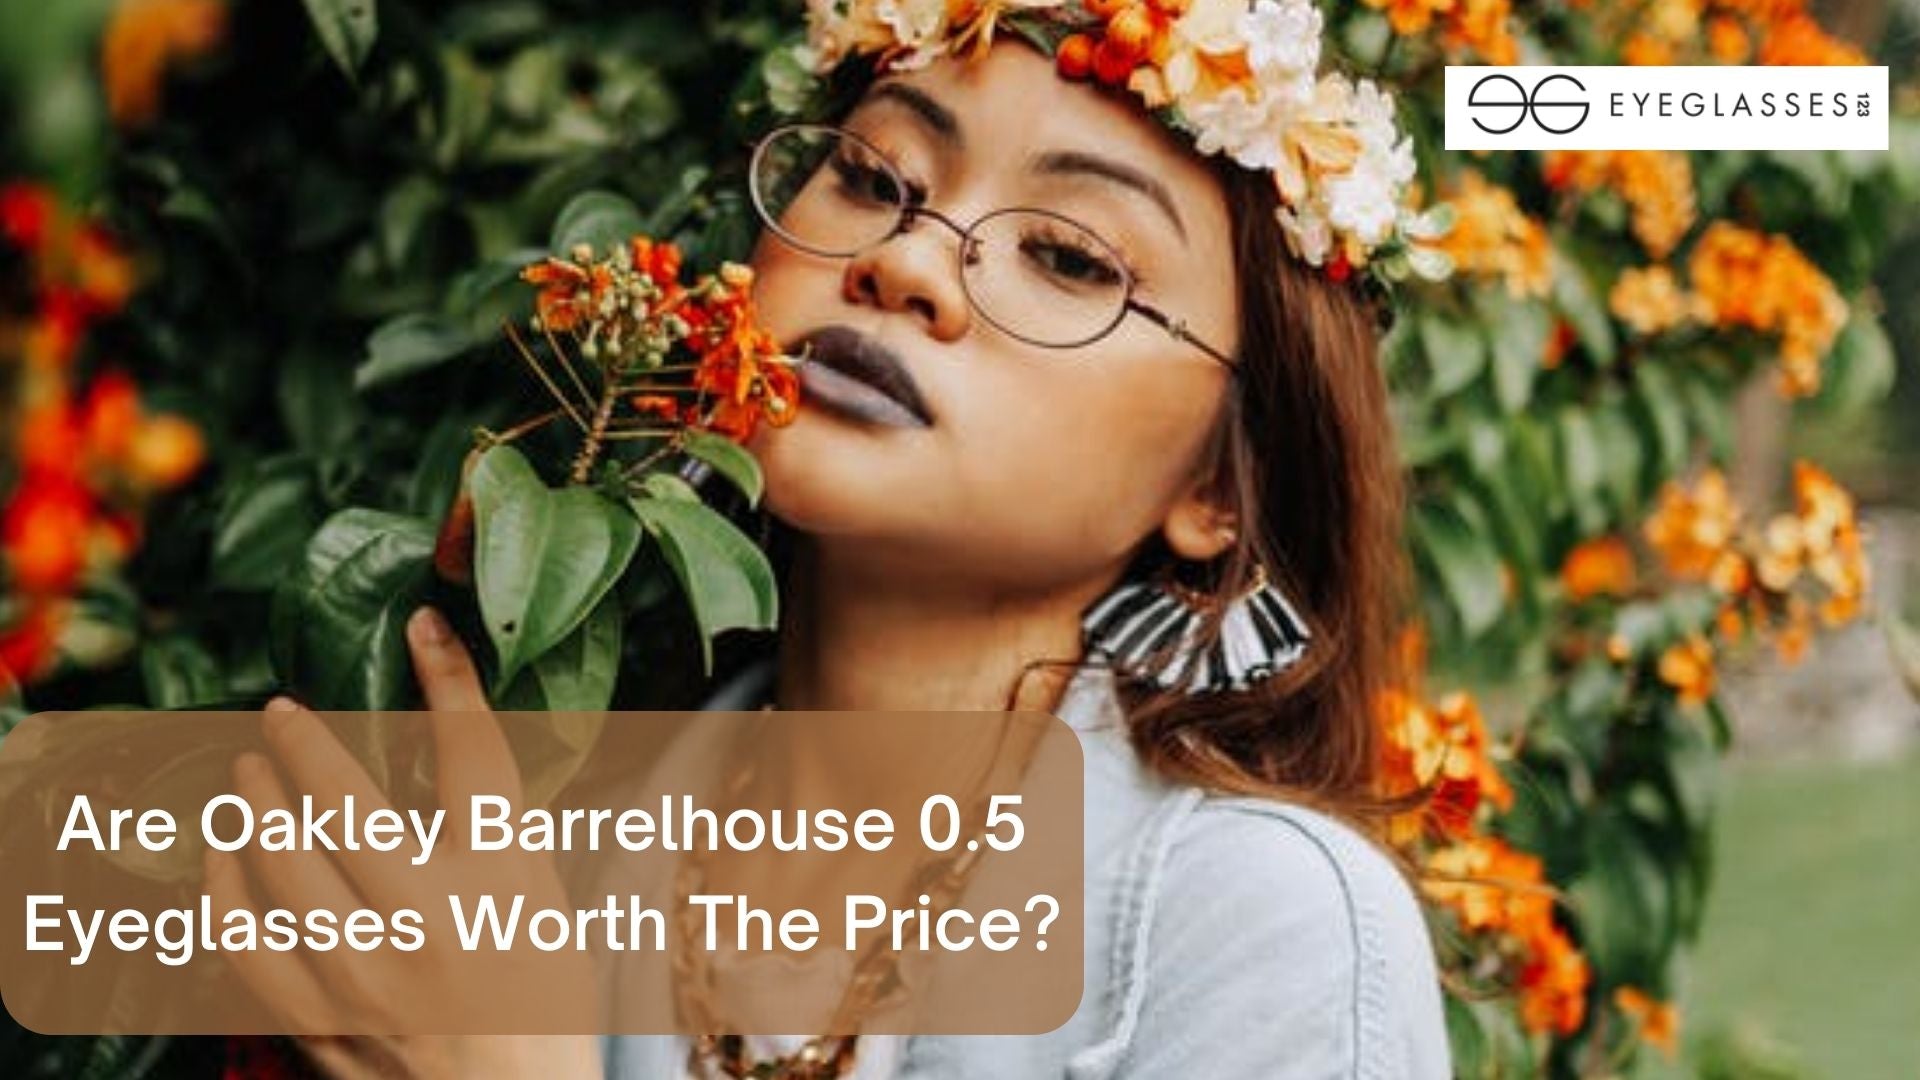 Are Oakley Barrelhouse 0.5 Eyeglasses Worth The Price?